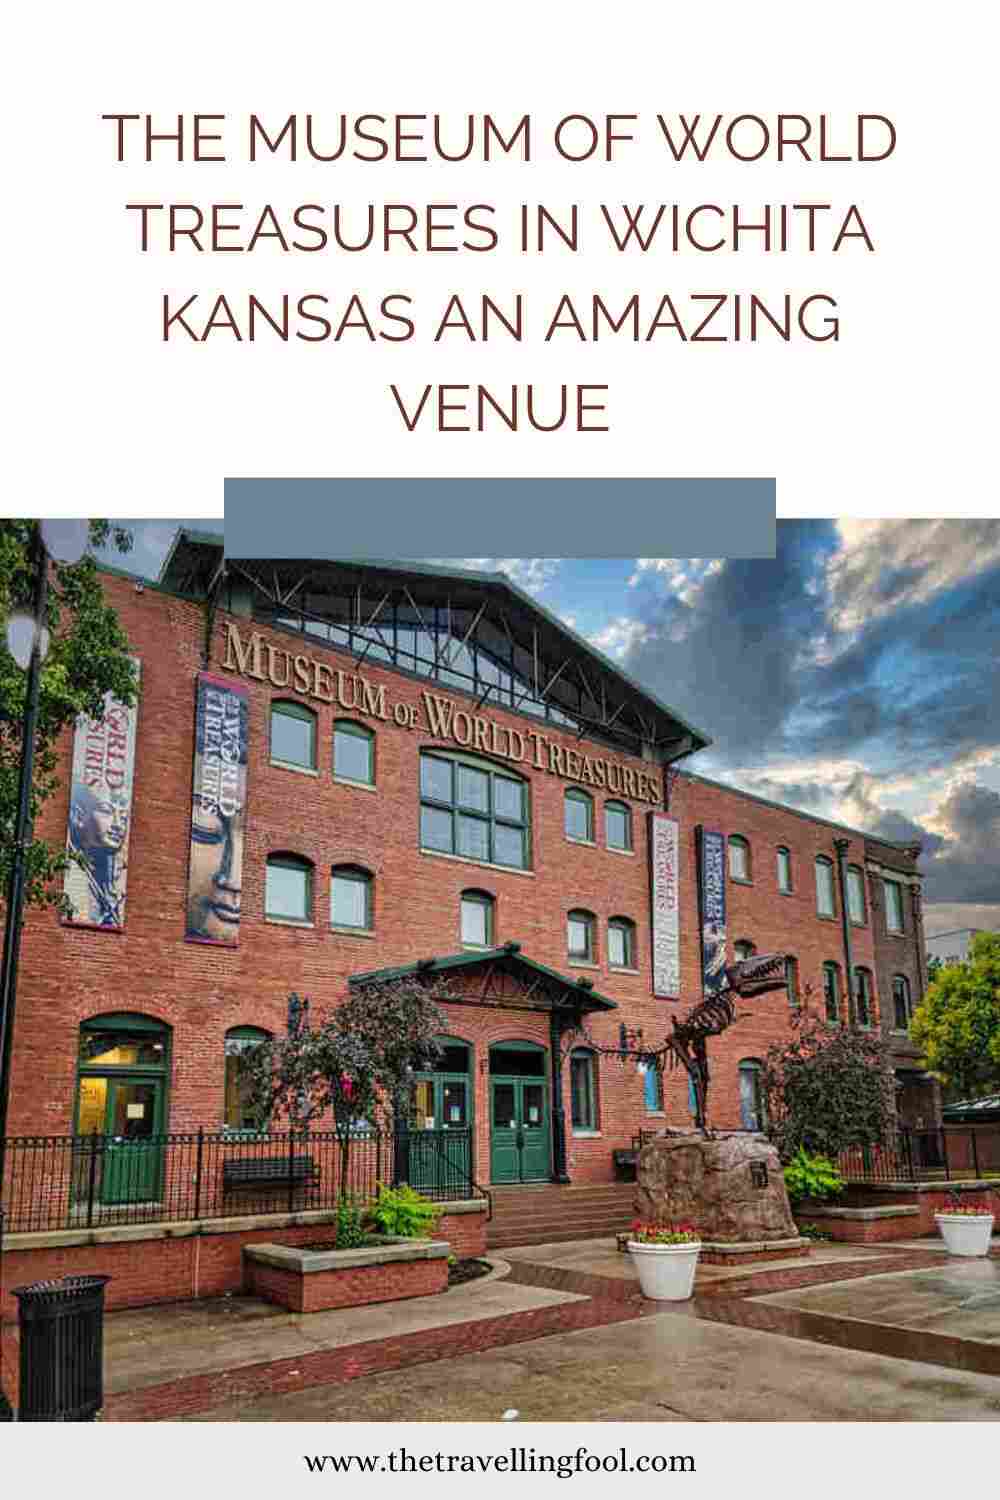 The Museum of World Treasures in Wichita Kansas an Amazing Venue